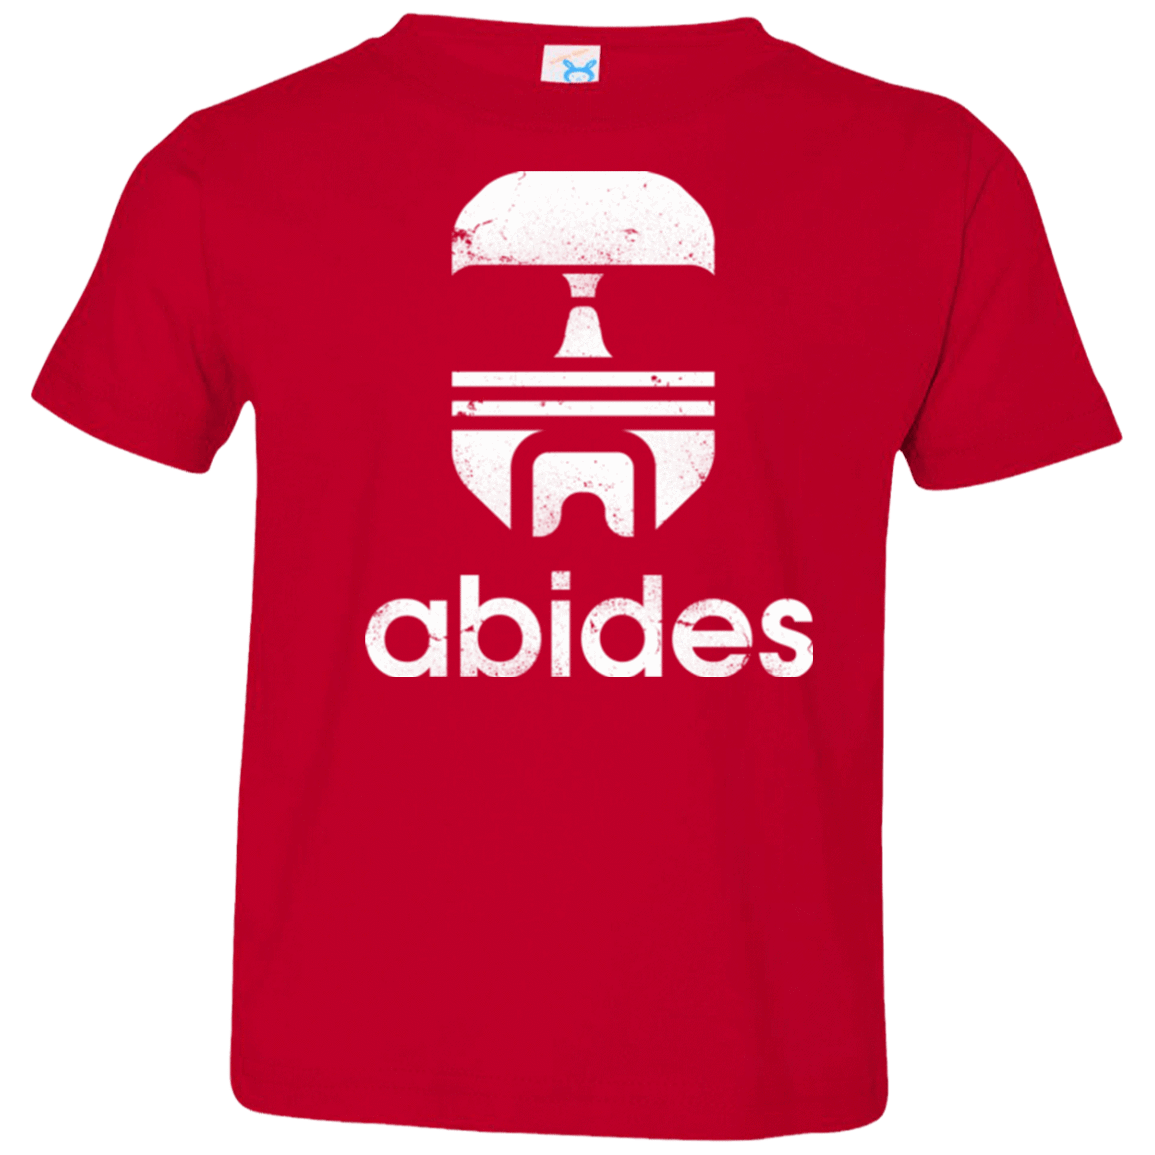 T-Shirts Red / 2T Abides Toddler Premium T-Shirt